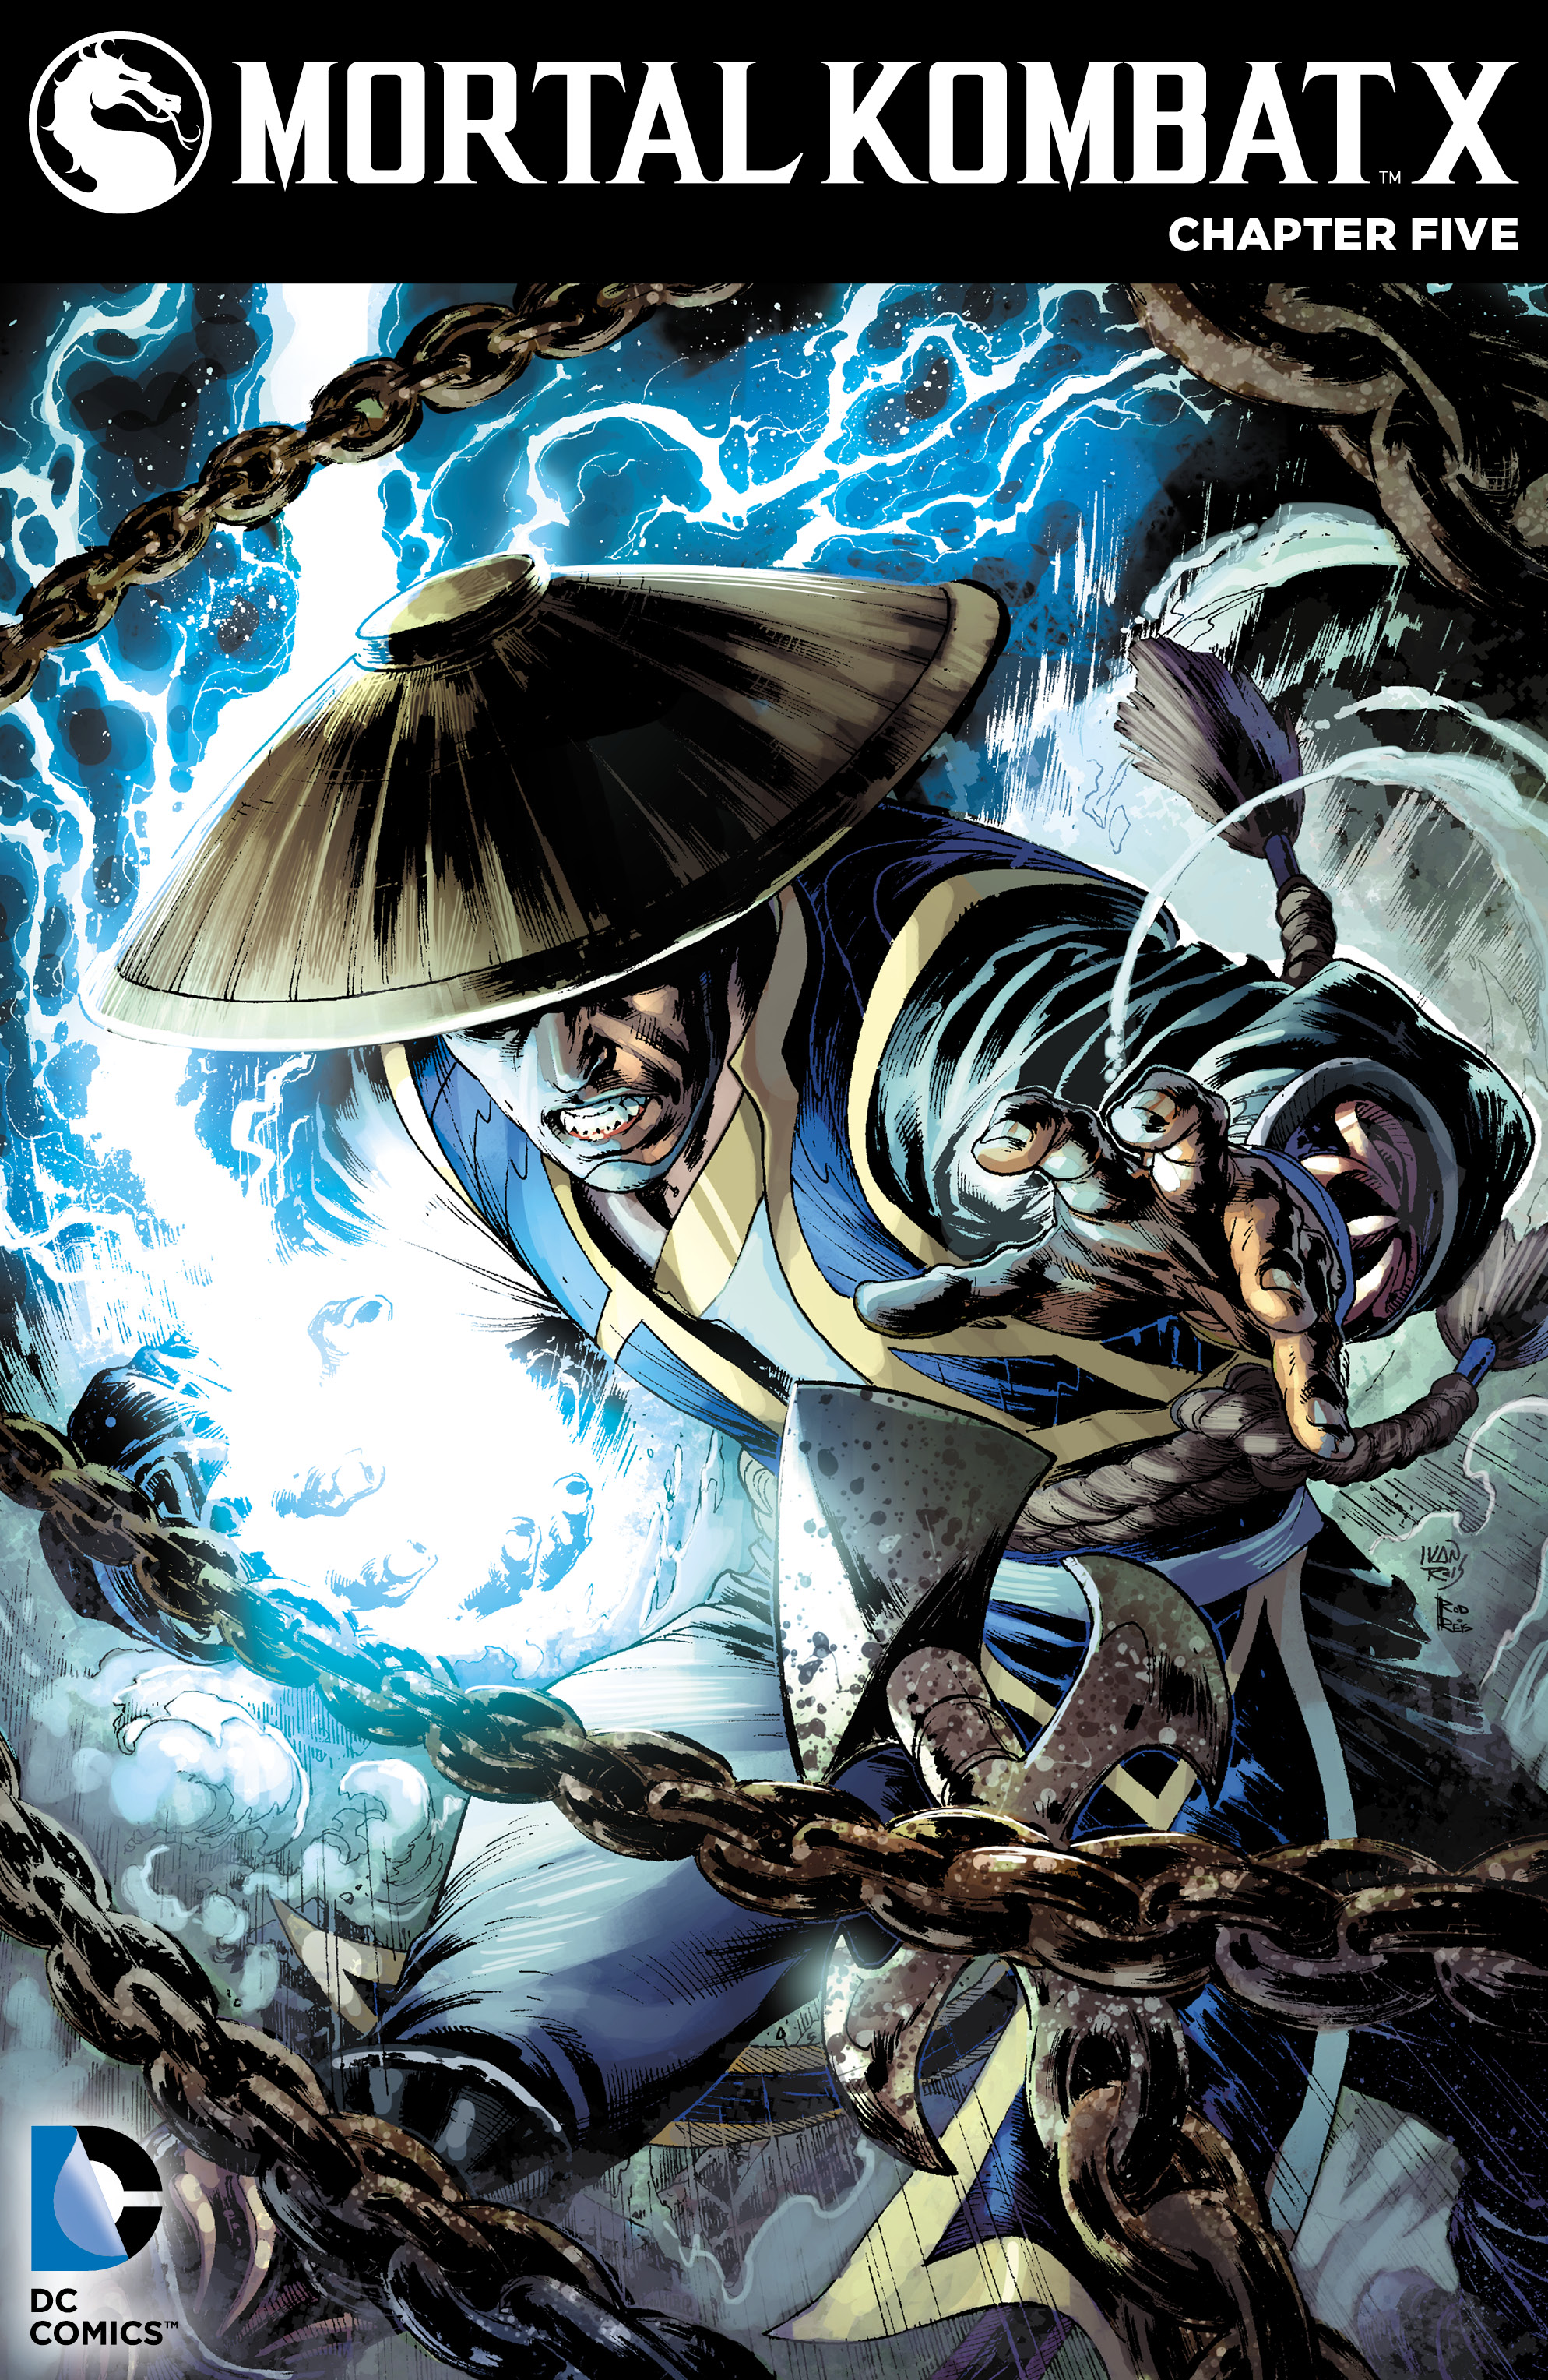 Mortal Kombat X #5 preview images